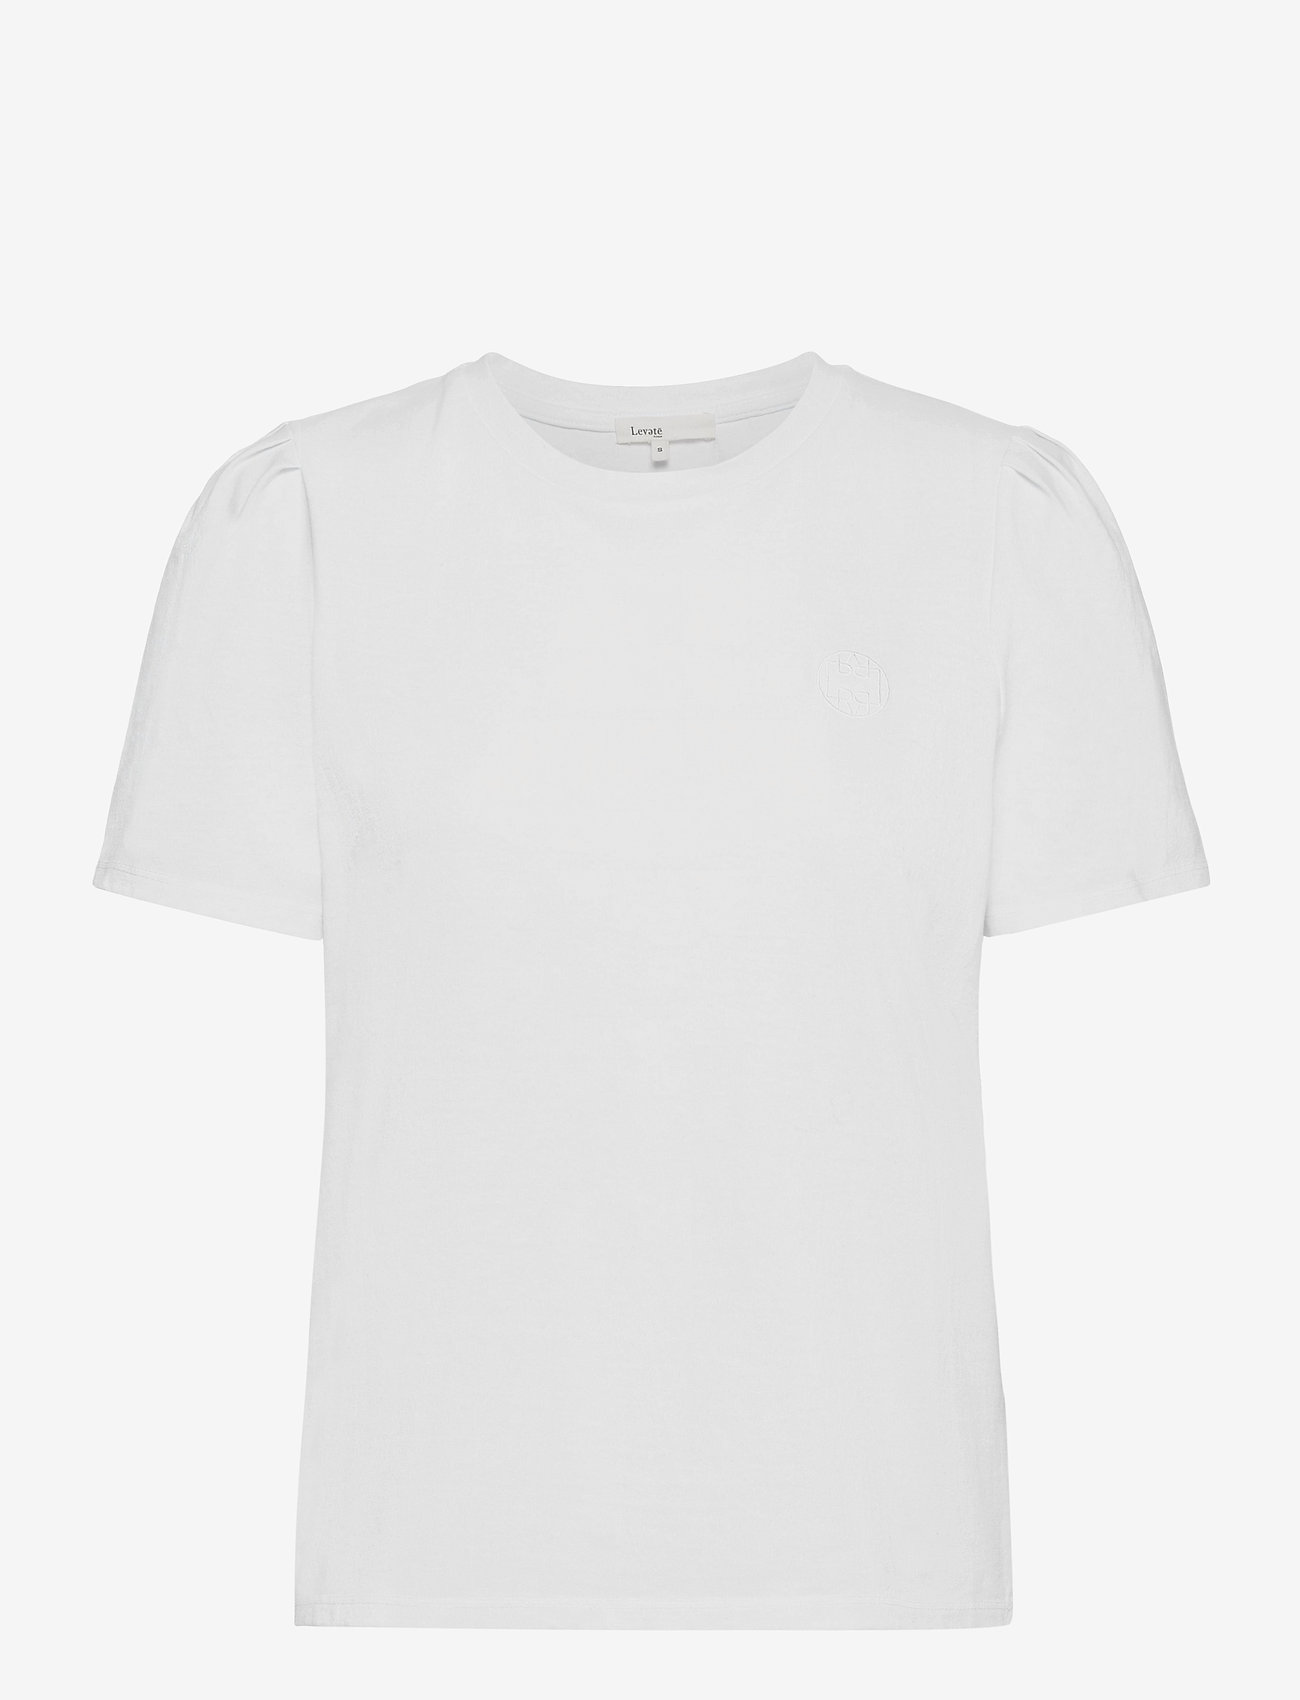 Levete Room - LR-ISOL - t-shirts & tops - l100 - white - 0